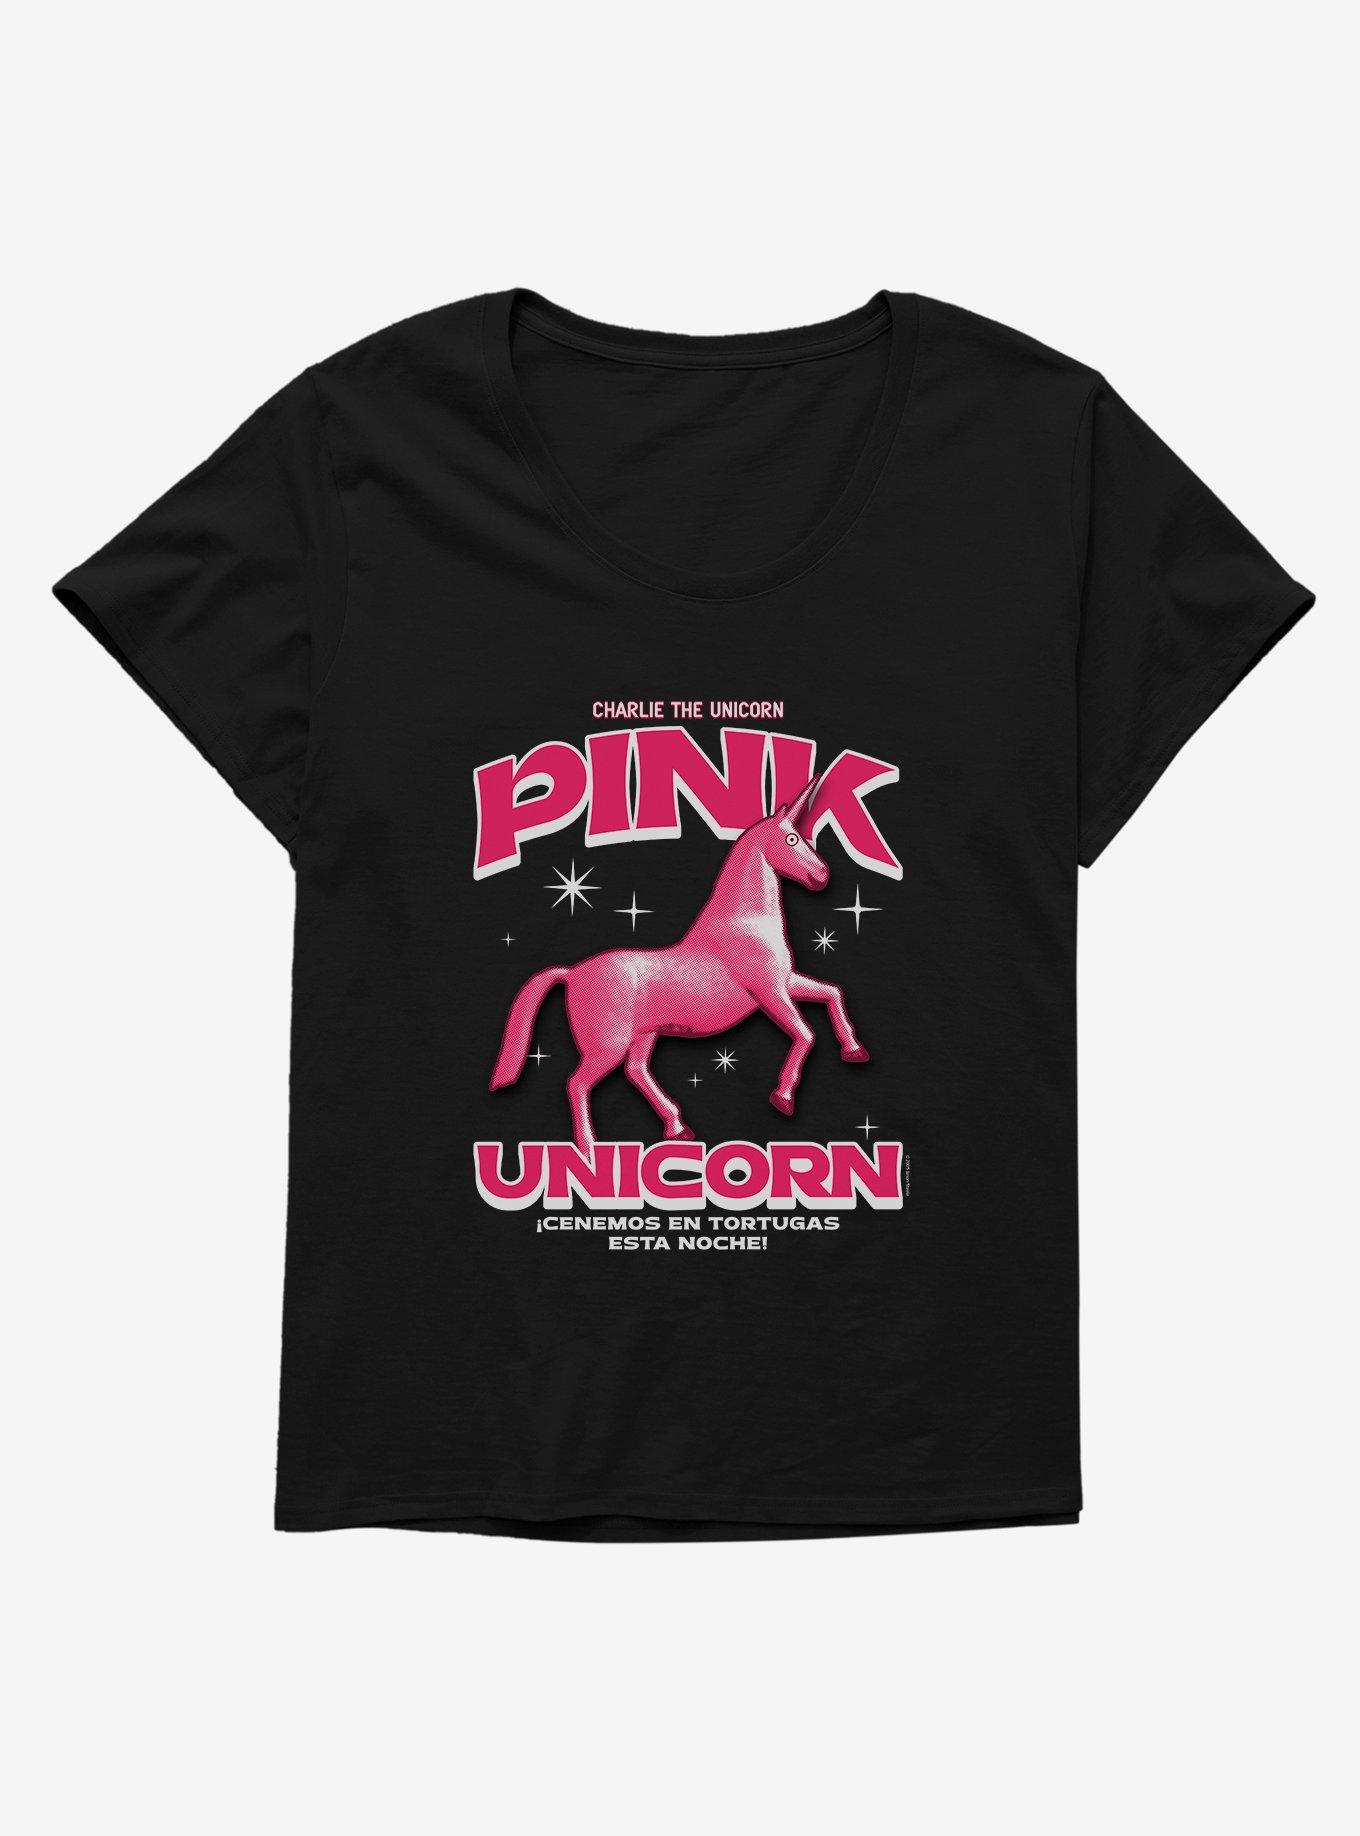 Charlie The Unicorn Pink Girls T-Shirt Plus